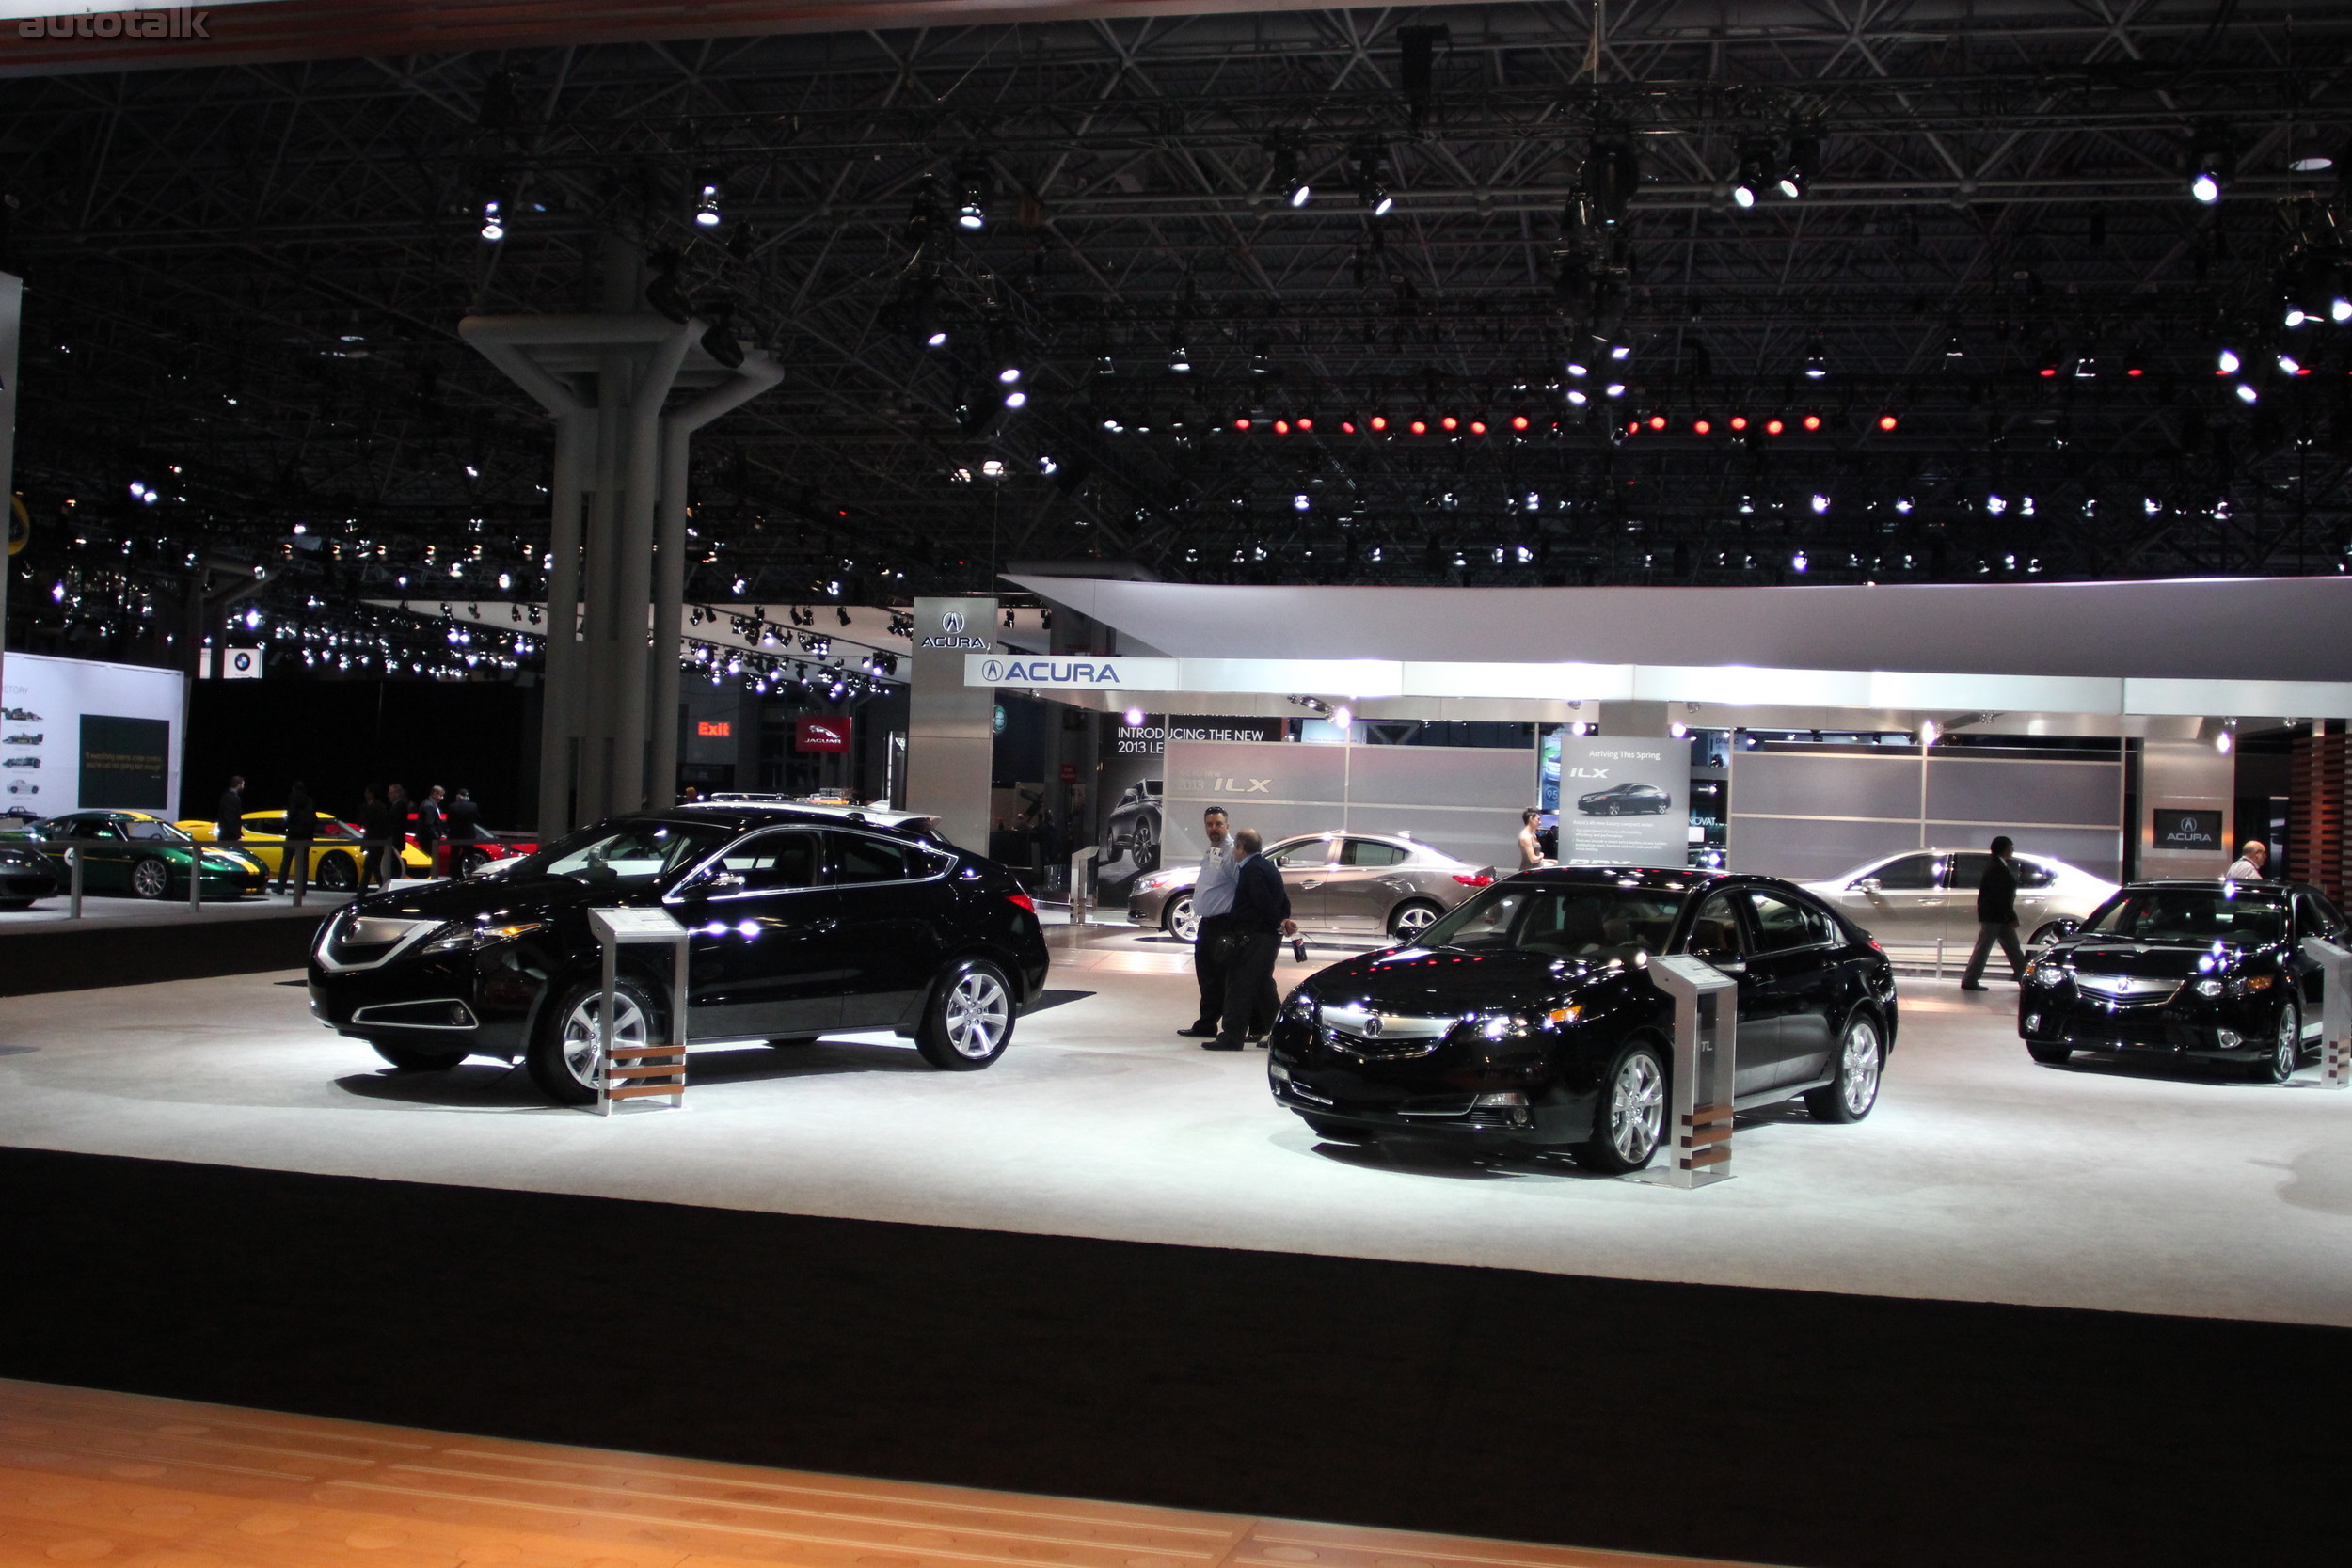 2012 New York International Auto Show Acura Booth